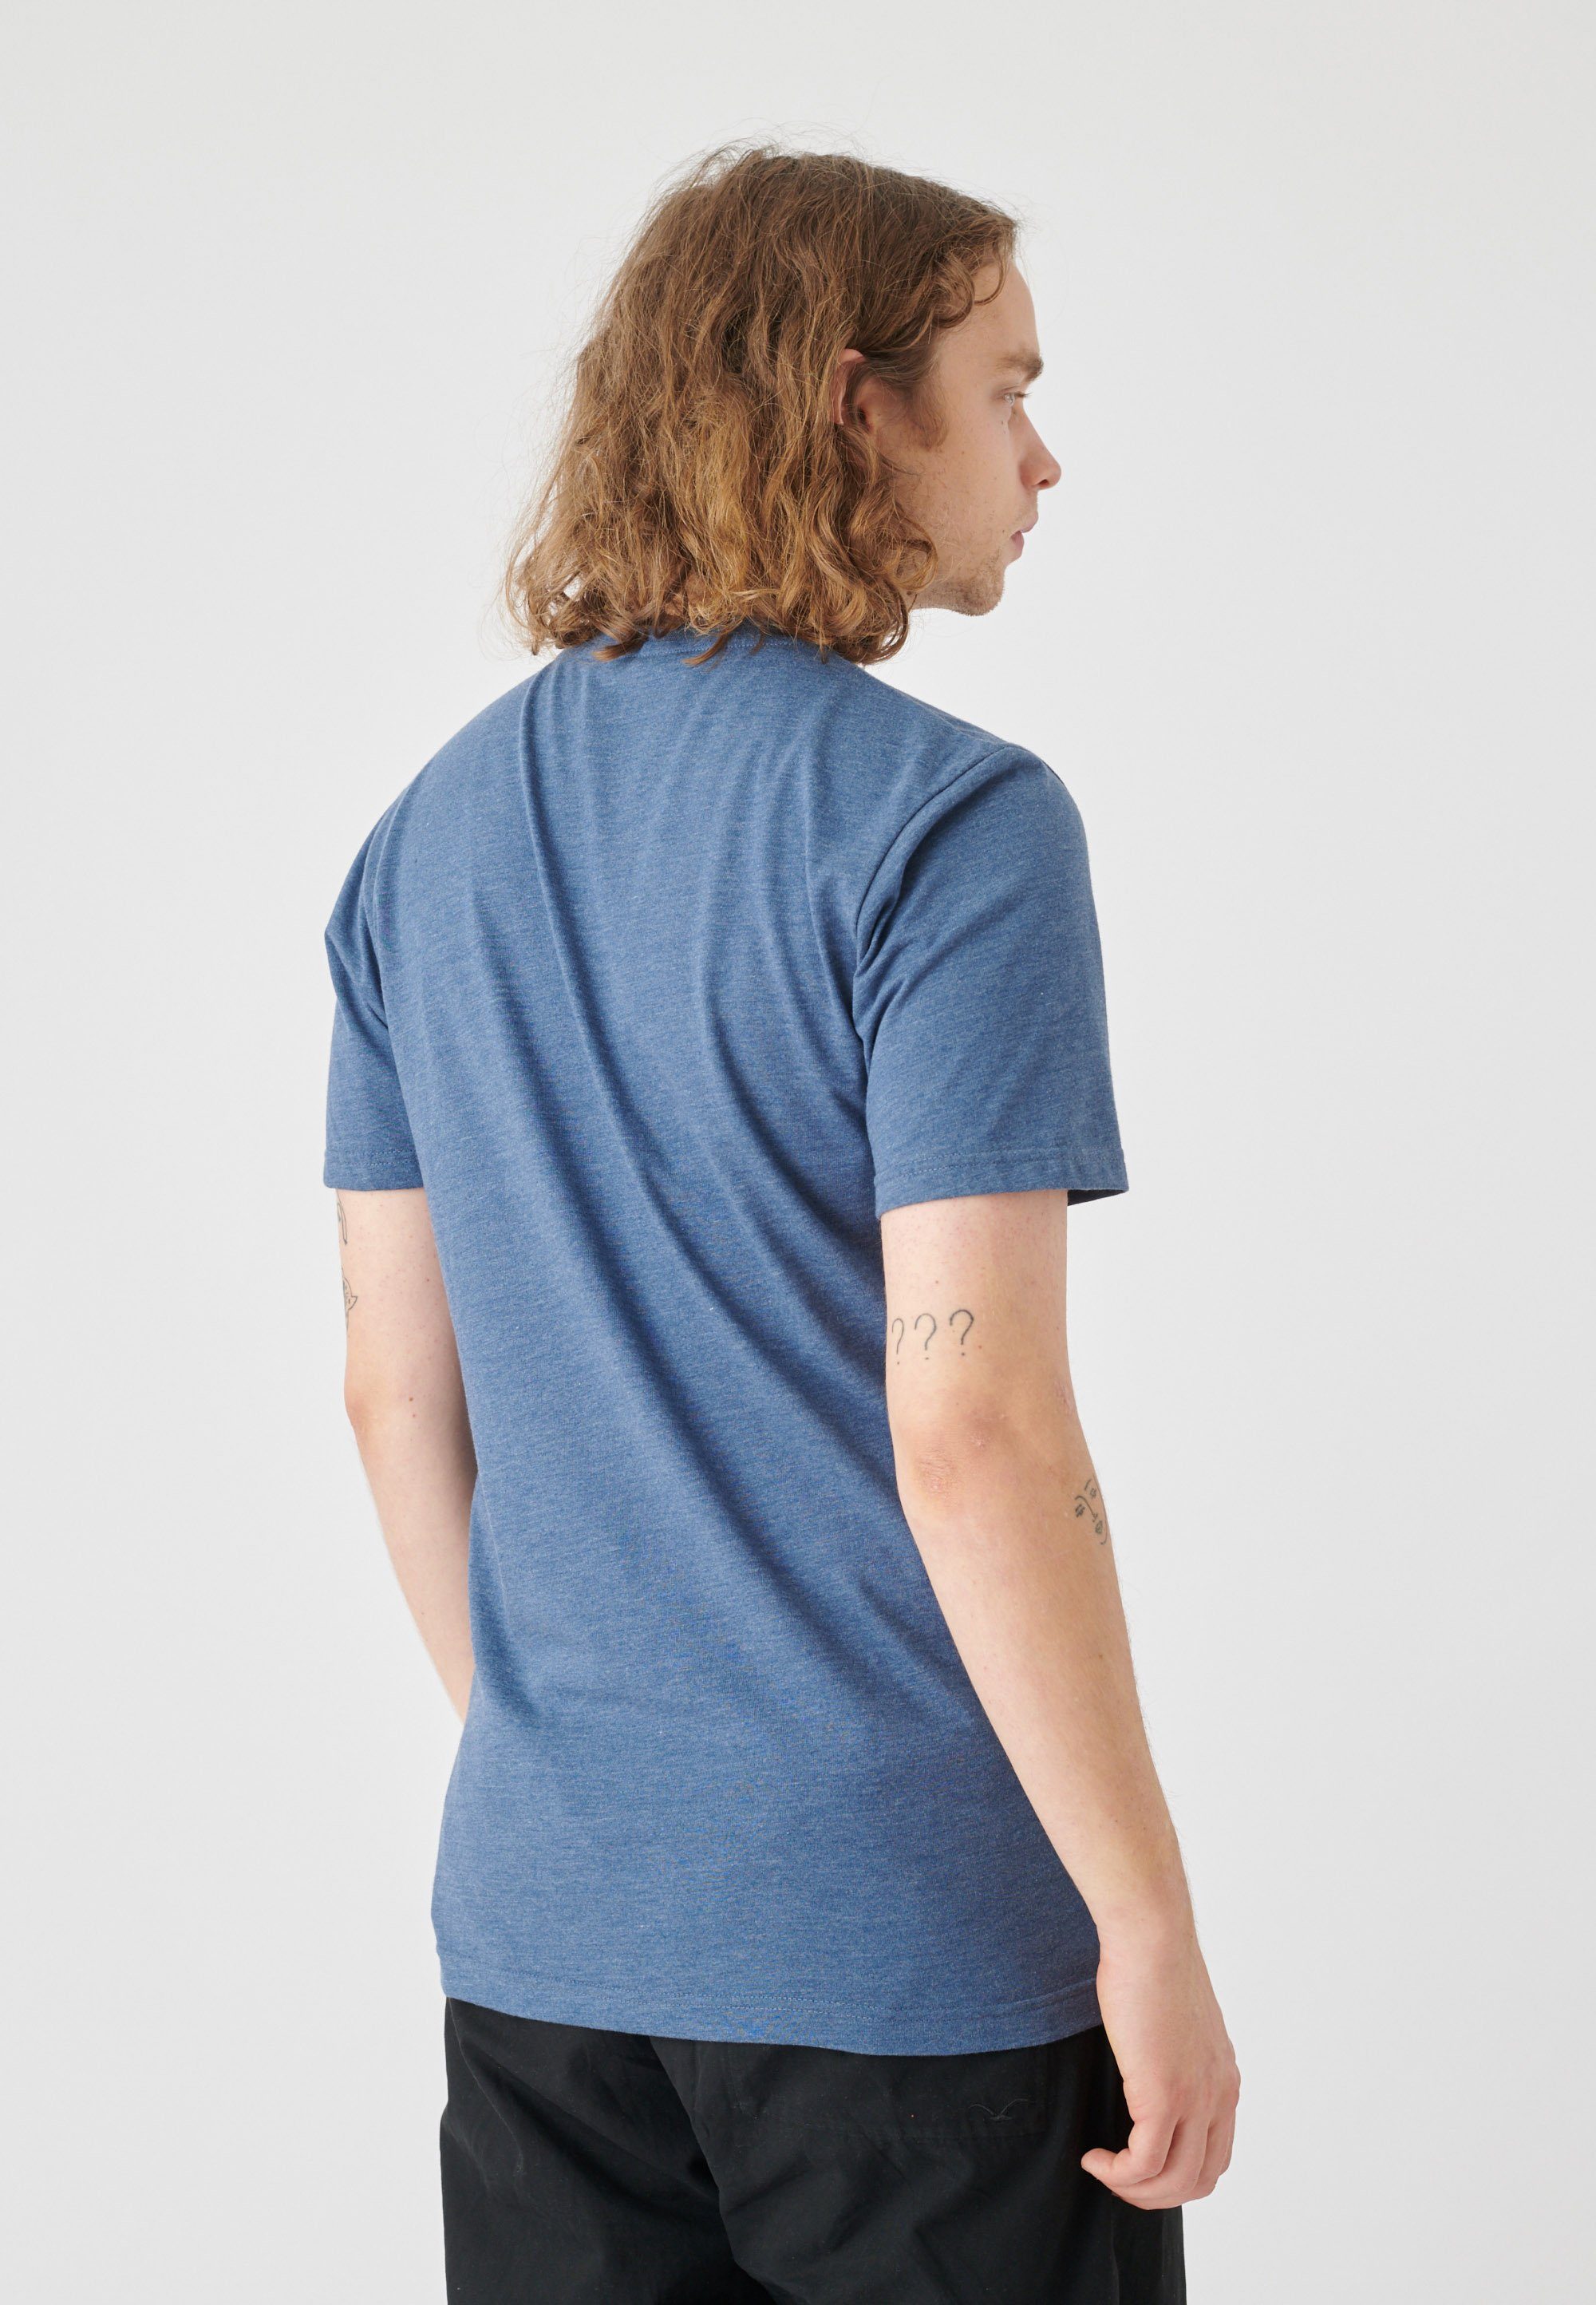 blau-blau Print Cleptomanicx T-Shirt Mowe mit klassischem